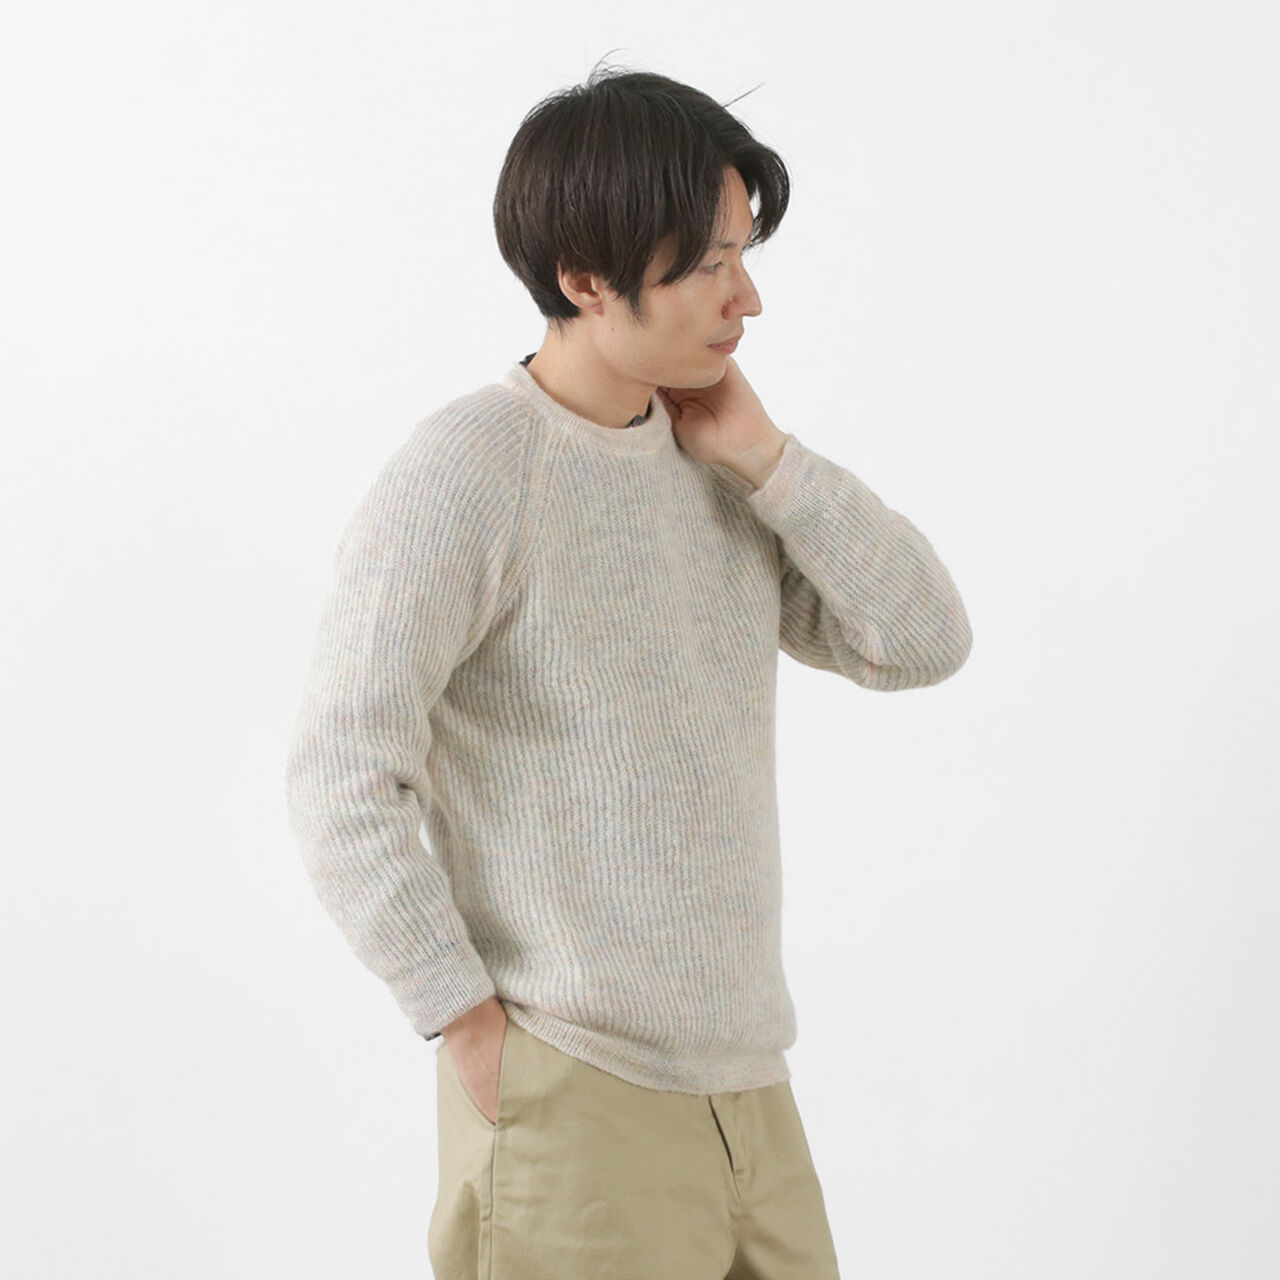 Portmix Kid Mohair Sweater,WhiteMix, large image number 0